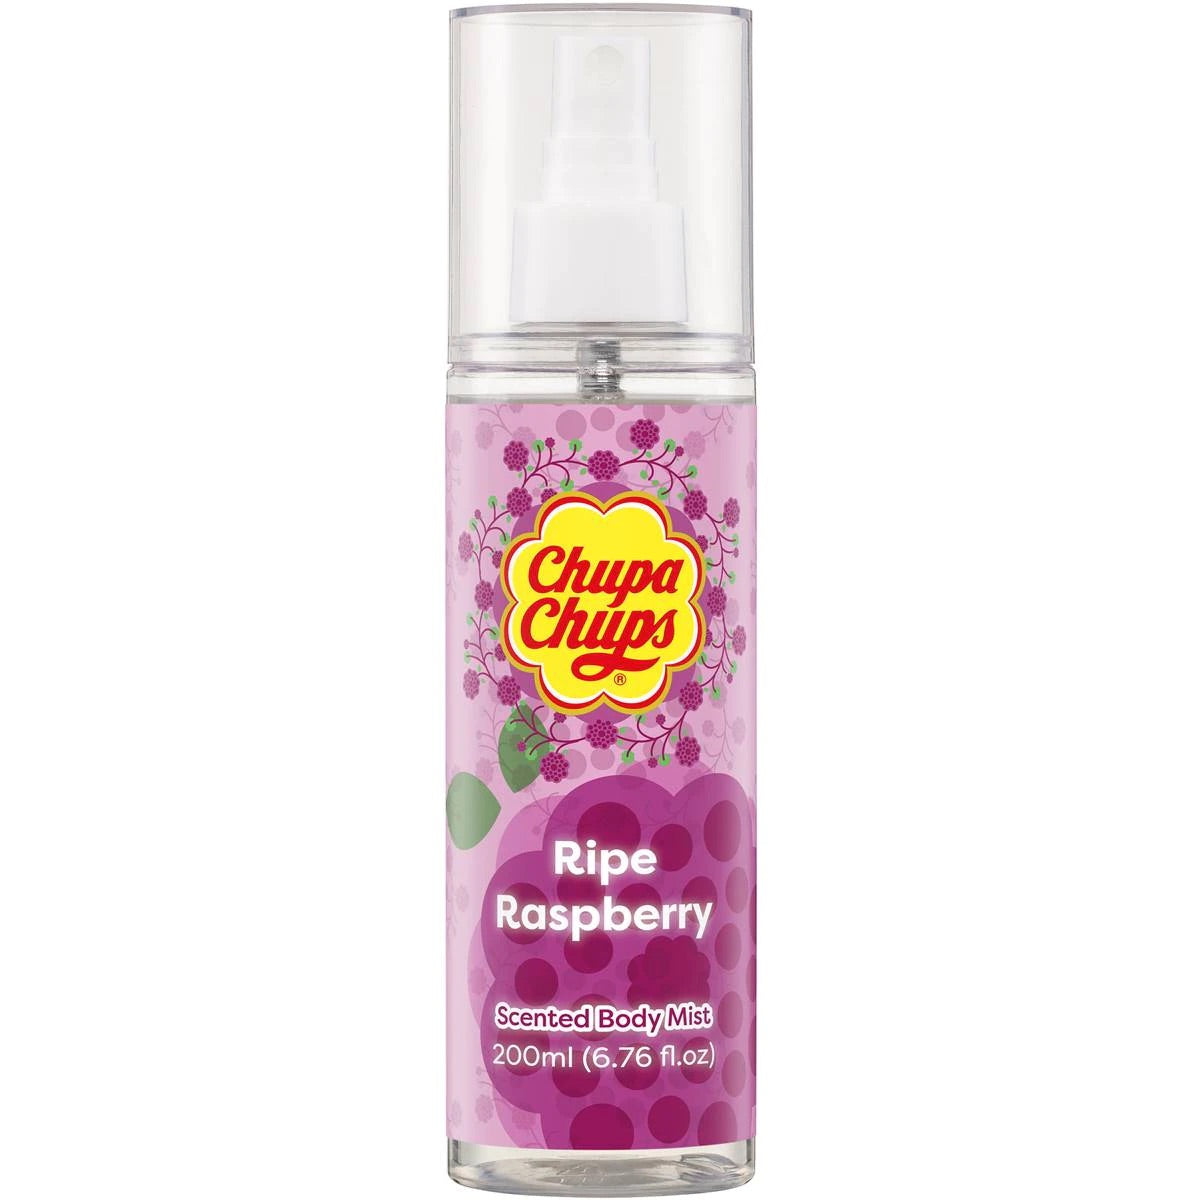 Chupa Chups Ripe Raspberry Scented Body Mist 200ml